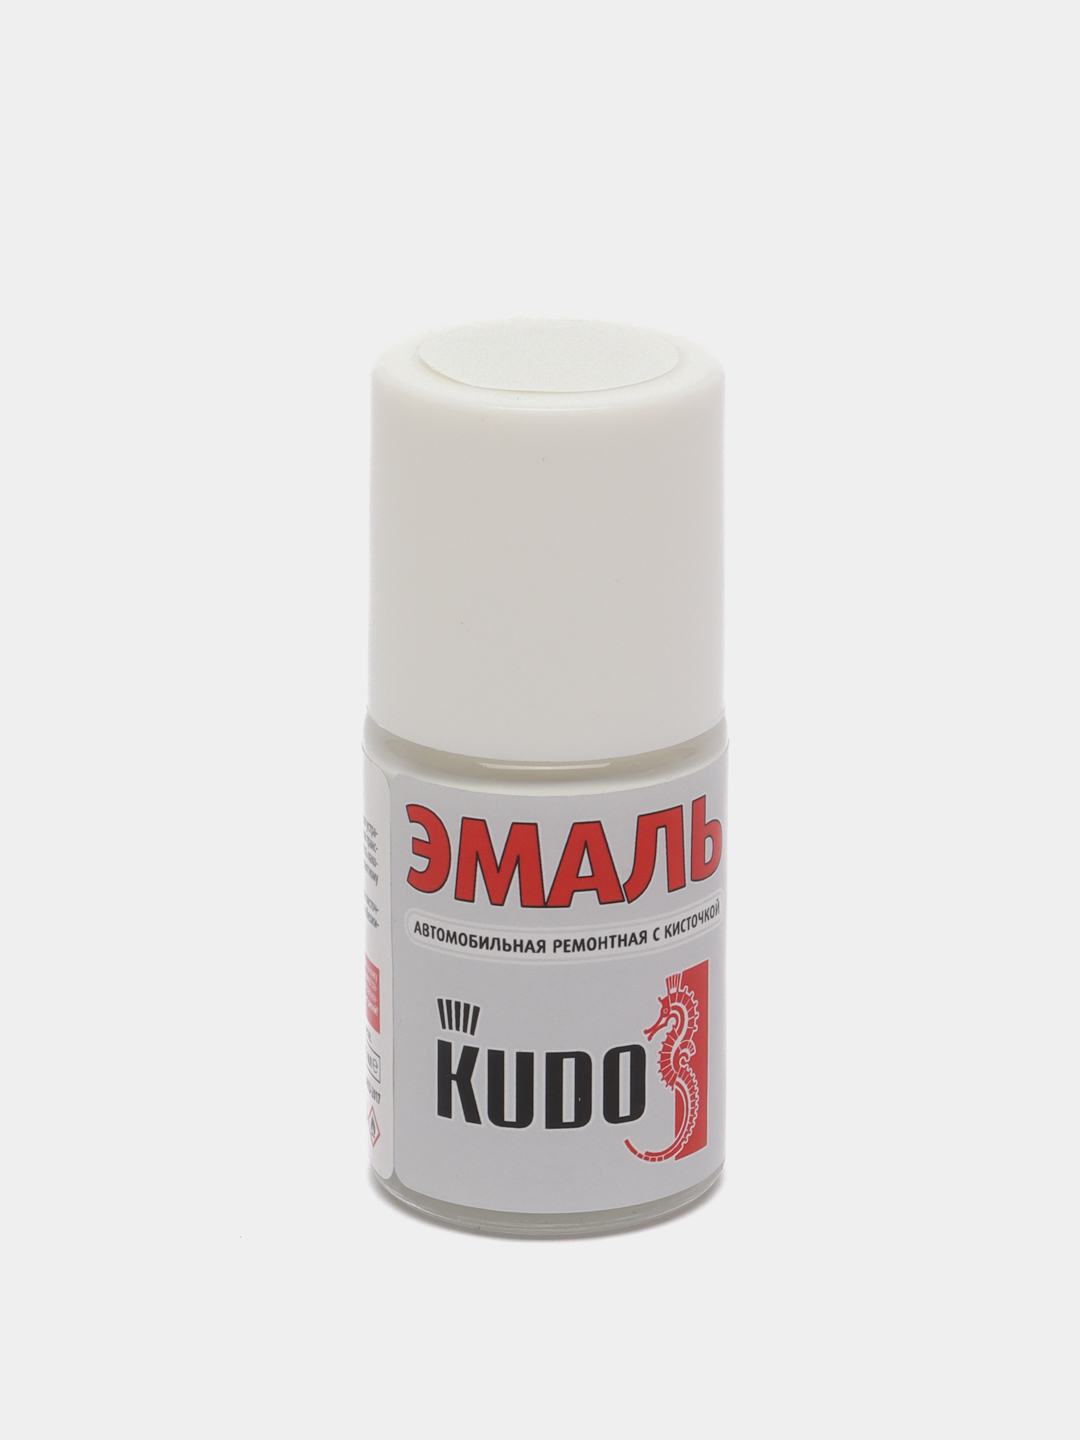 Эмаль автомобильная ремонтная kudo. Автомобильная ремонтная эмаль Kudo с кисточкой красная ku 70165. Pgu Crystal White краска. Kudo эмаль автомобильная ремонтная красная. Эмаль ремонтная с кисточкой для ванны.